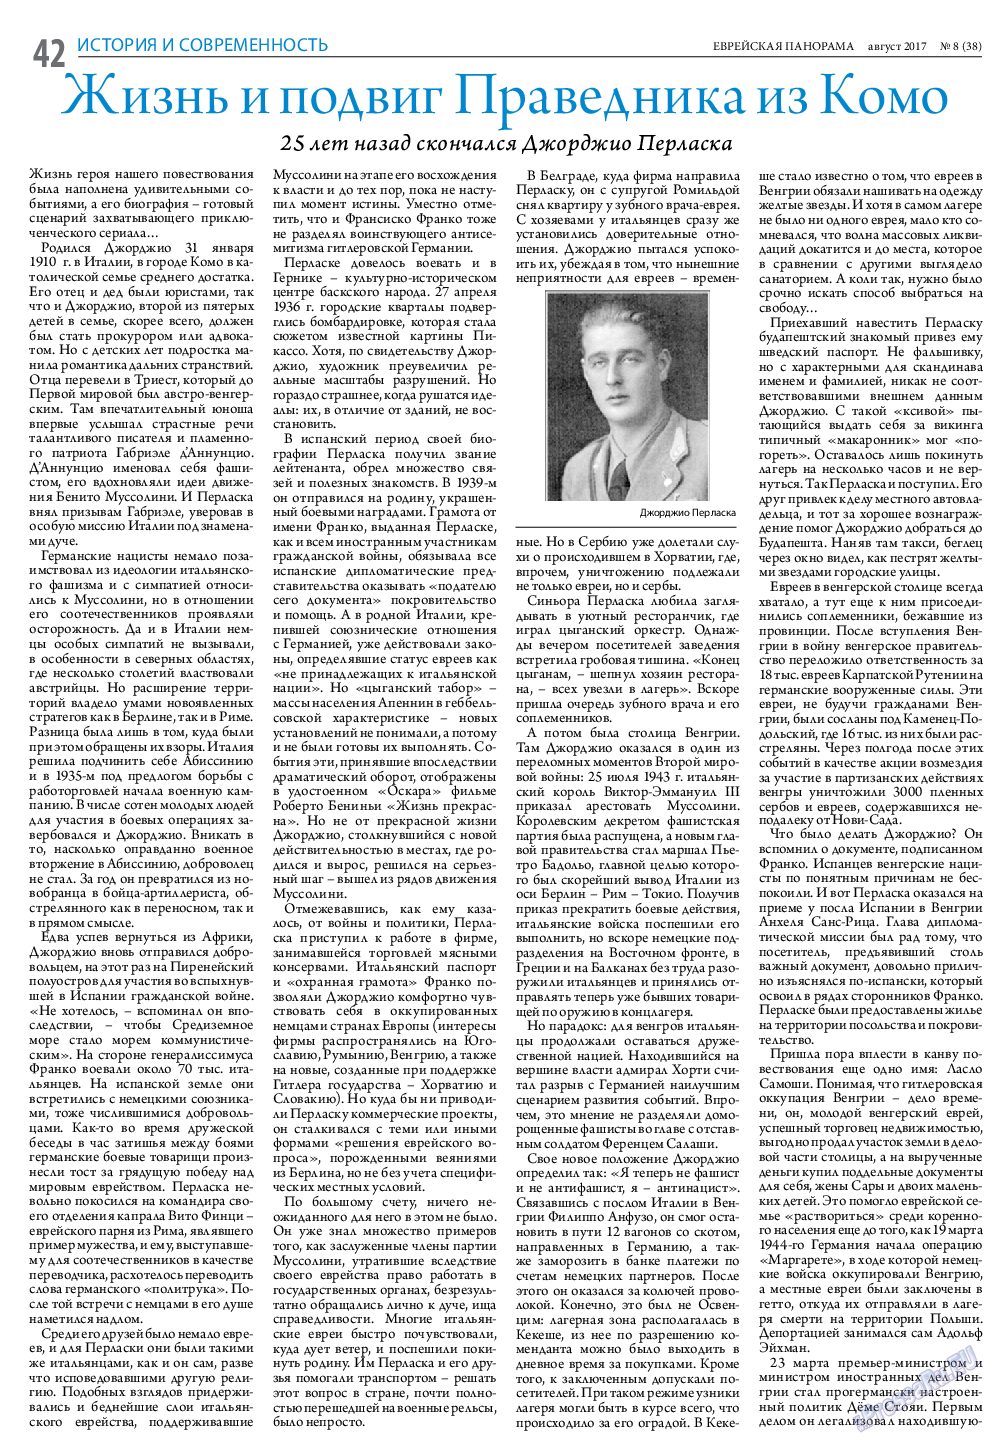 Еврейская панорама, газета. 2017 №8 стр.42